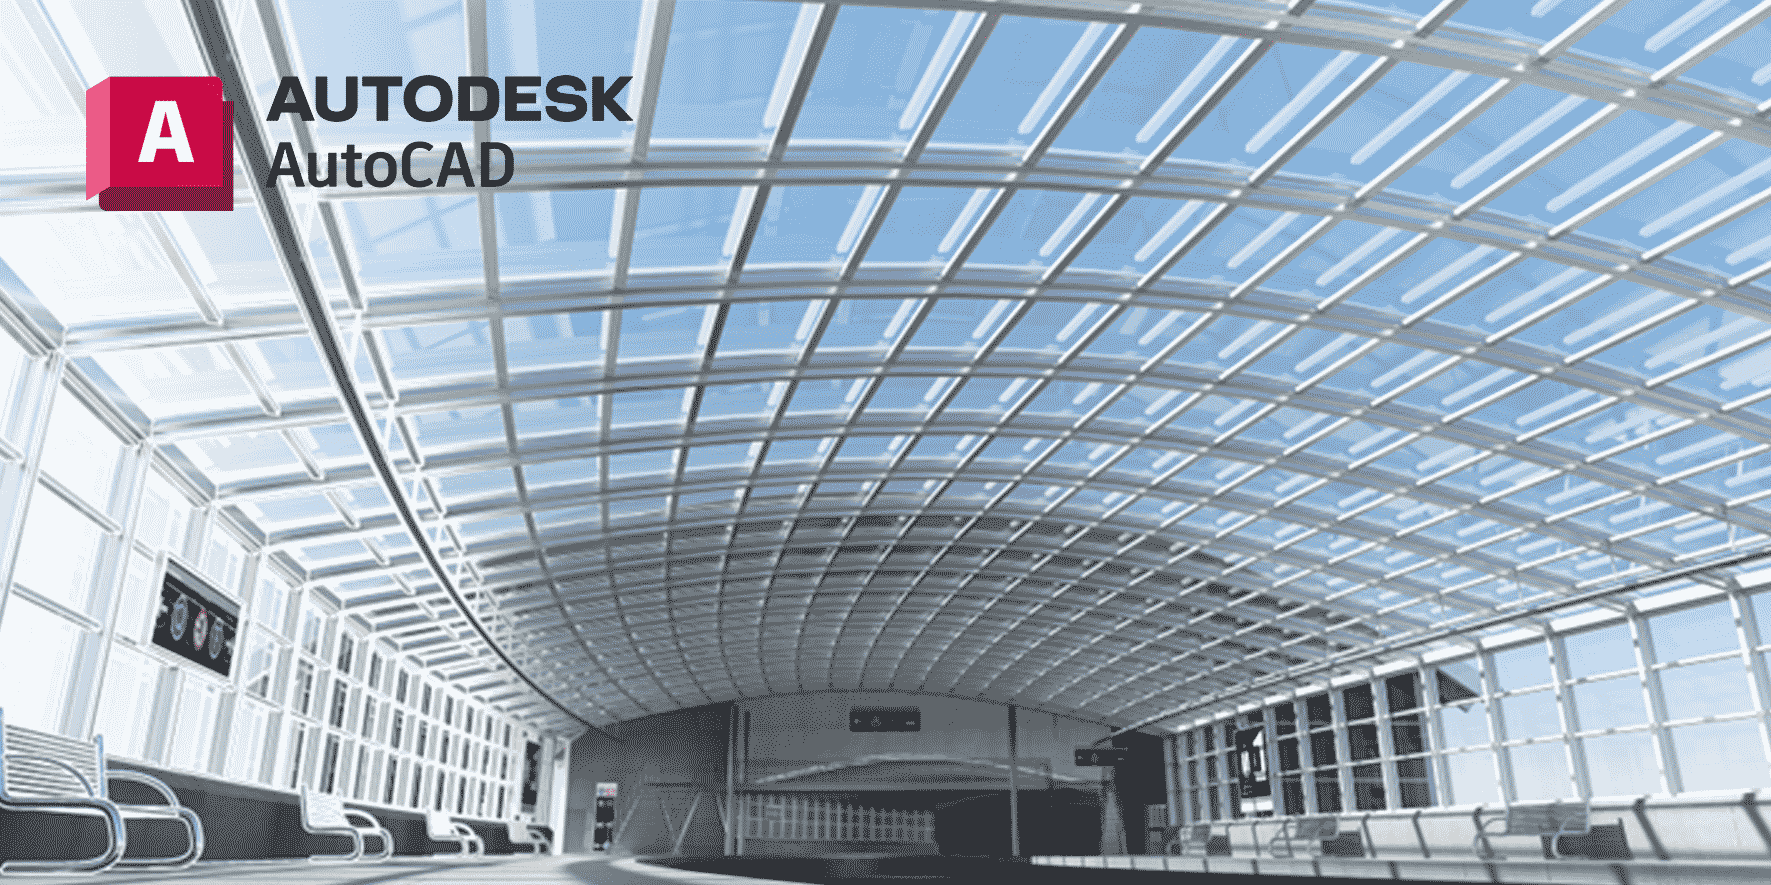 Autodesk AutoCAD: は建築設計から
インテリアまで様々な作業に対応。